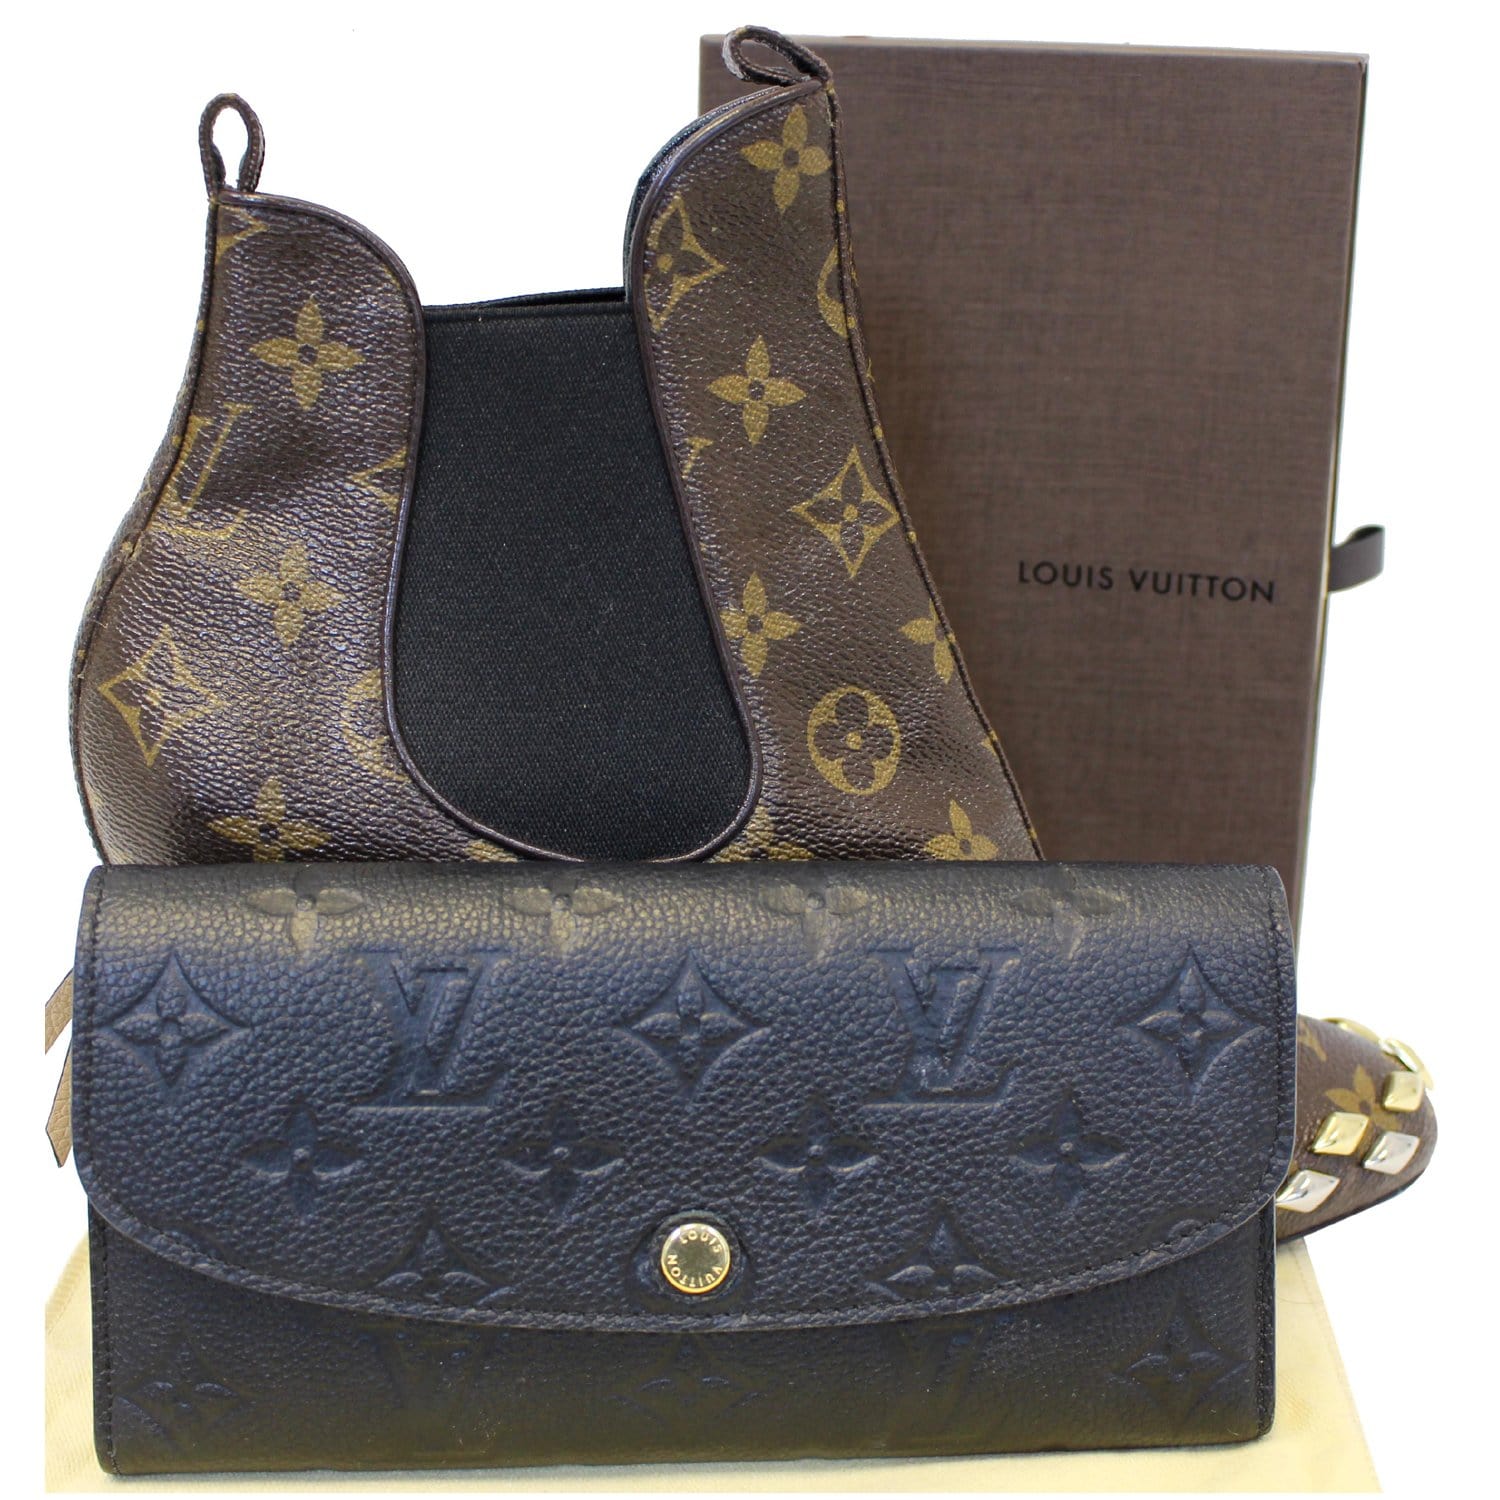 Emilie Wallet Monogram Empreinte Leather - Women - Small Leather Goods